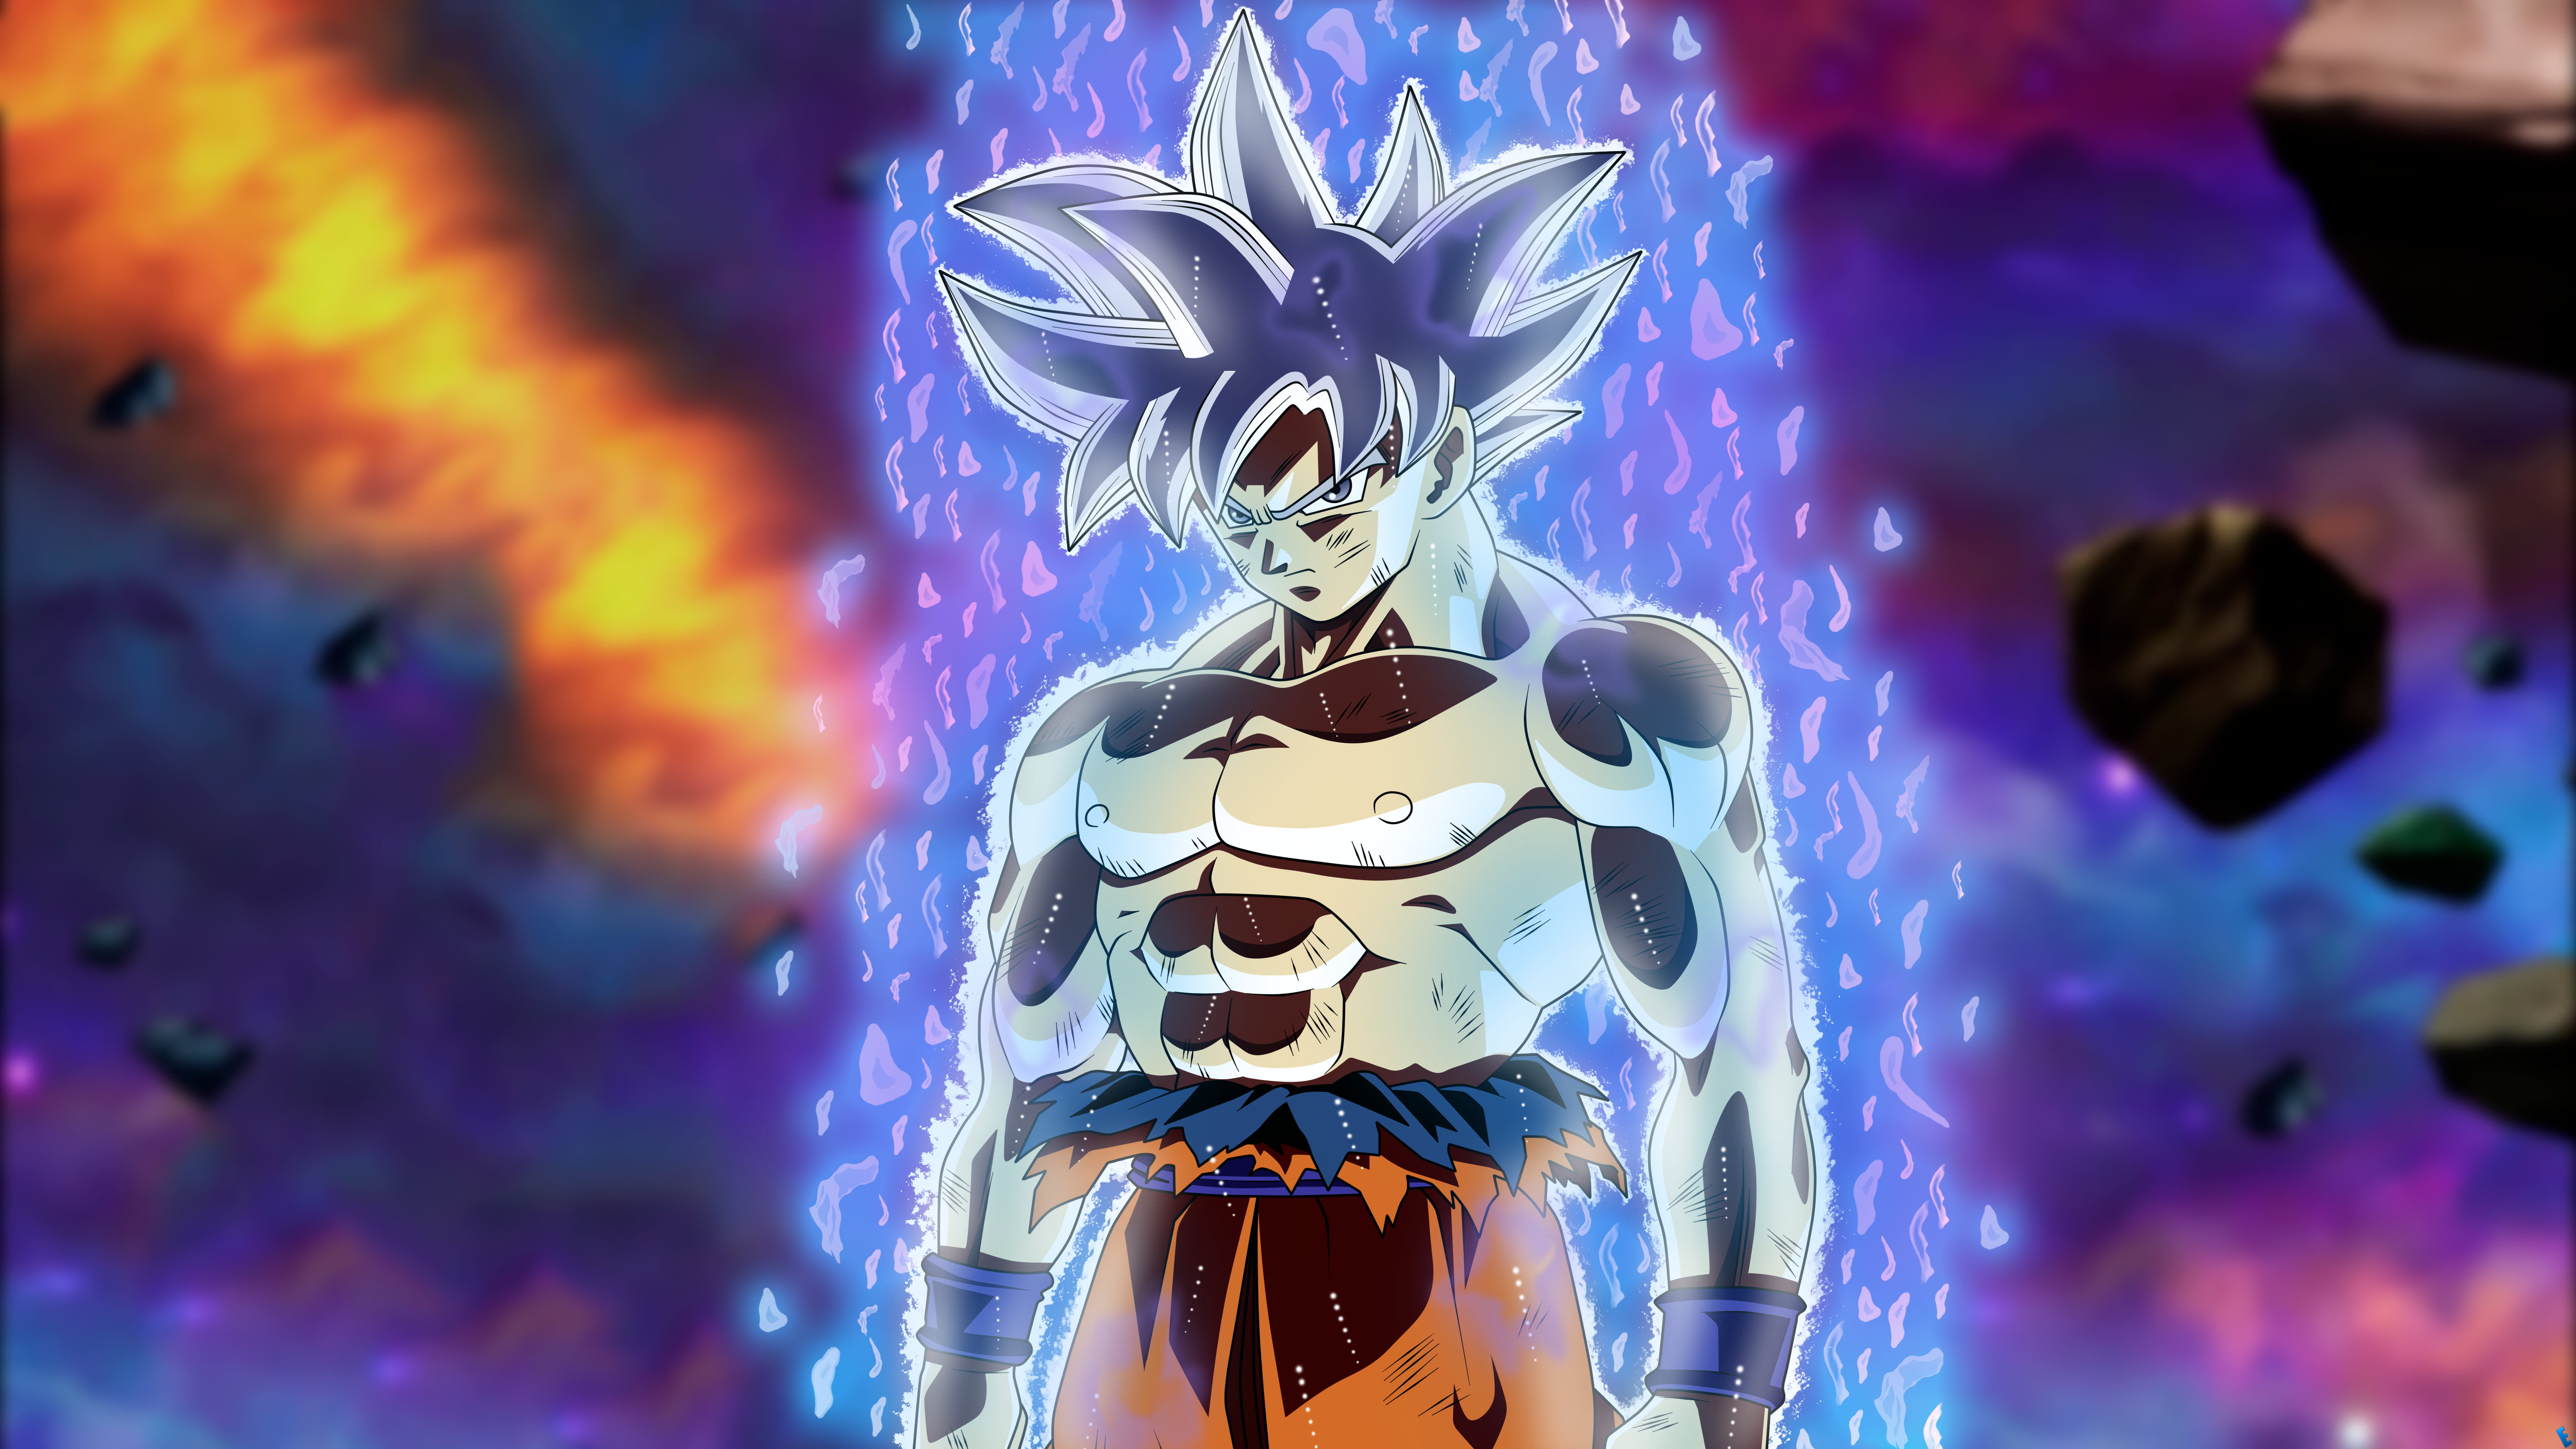 Son Goku digital wallpaper, Son Goku, ultra instict, Mastered